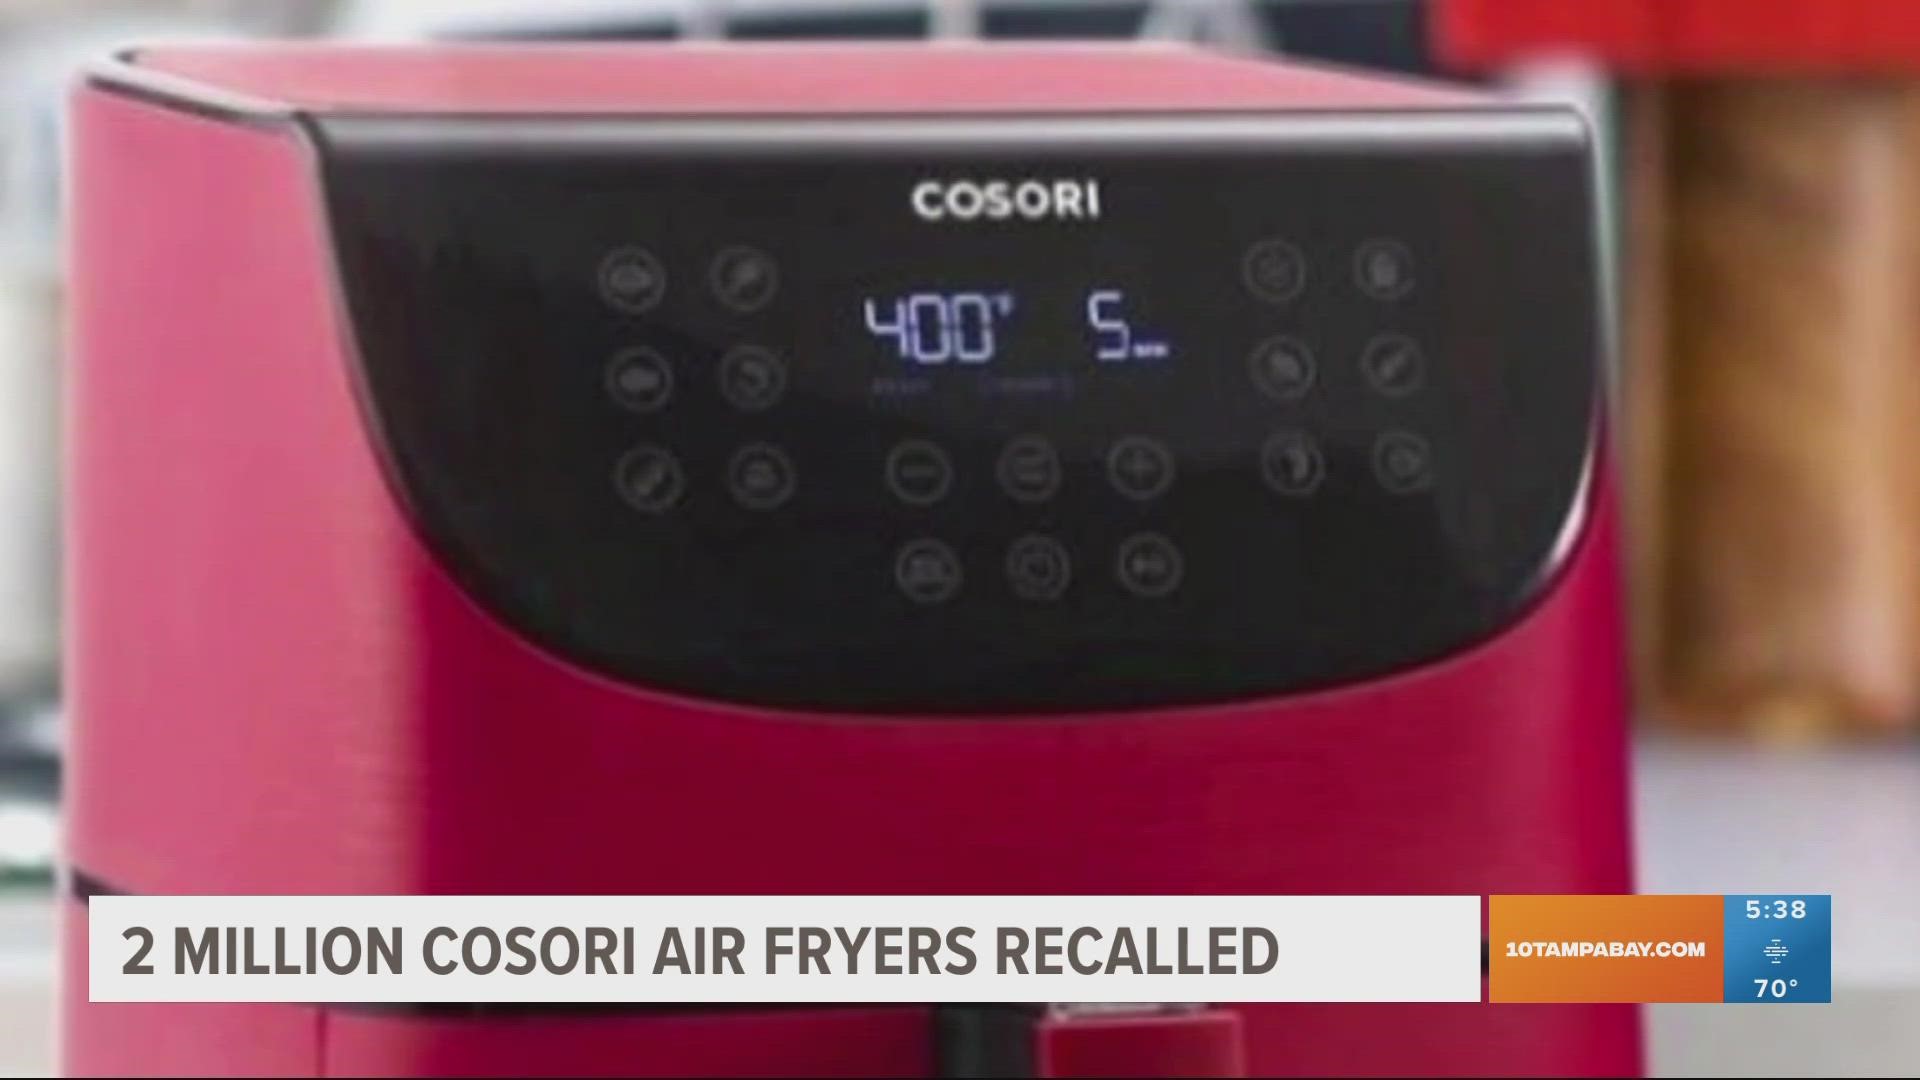 2M Cosori air fryers recalled over fire, burn hazards